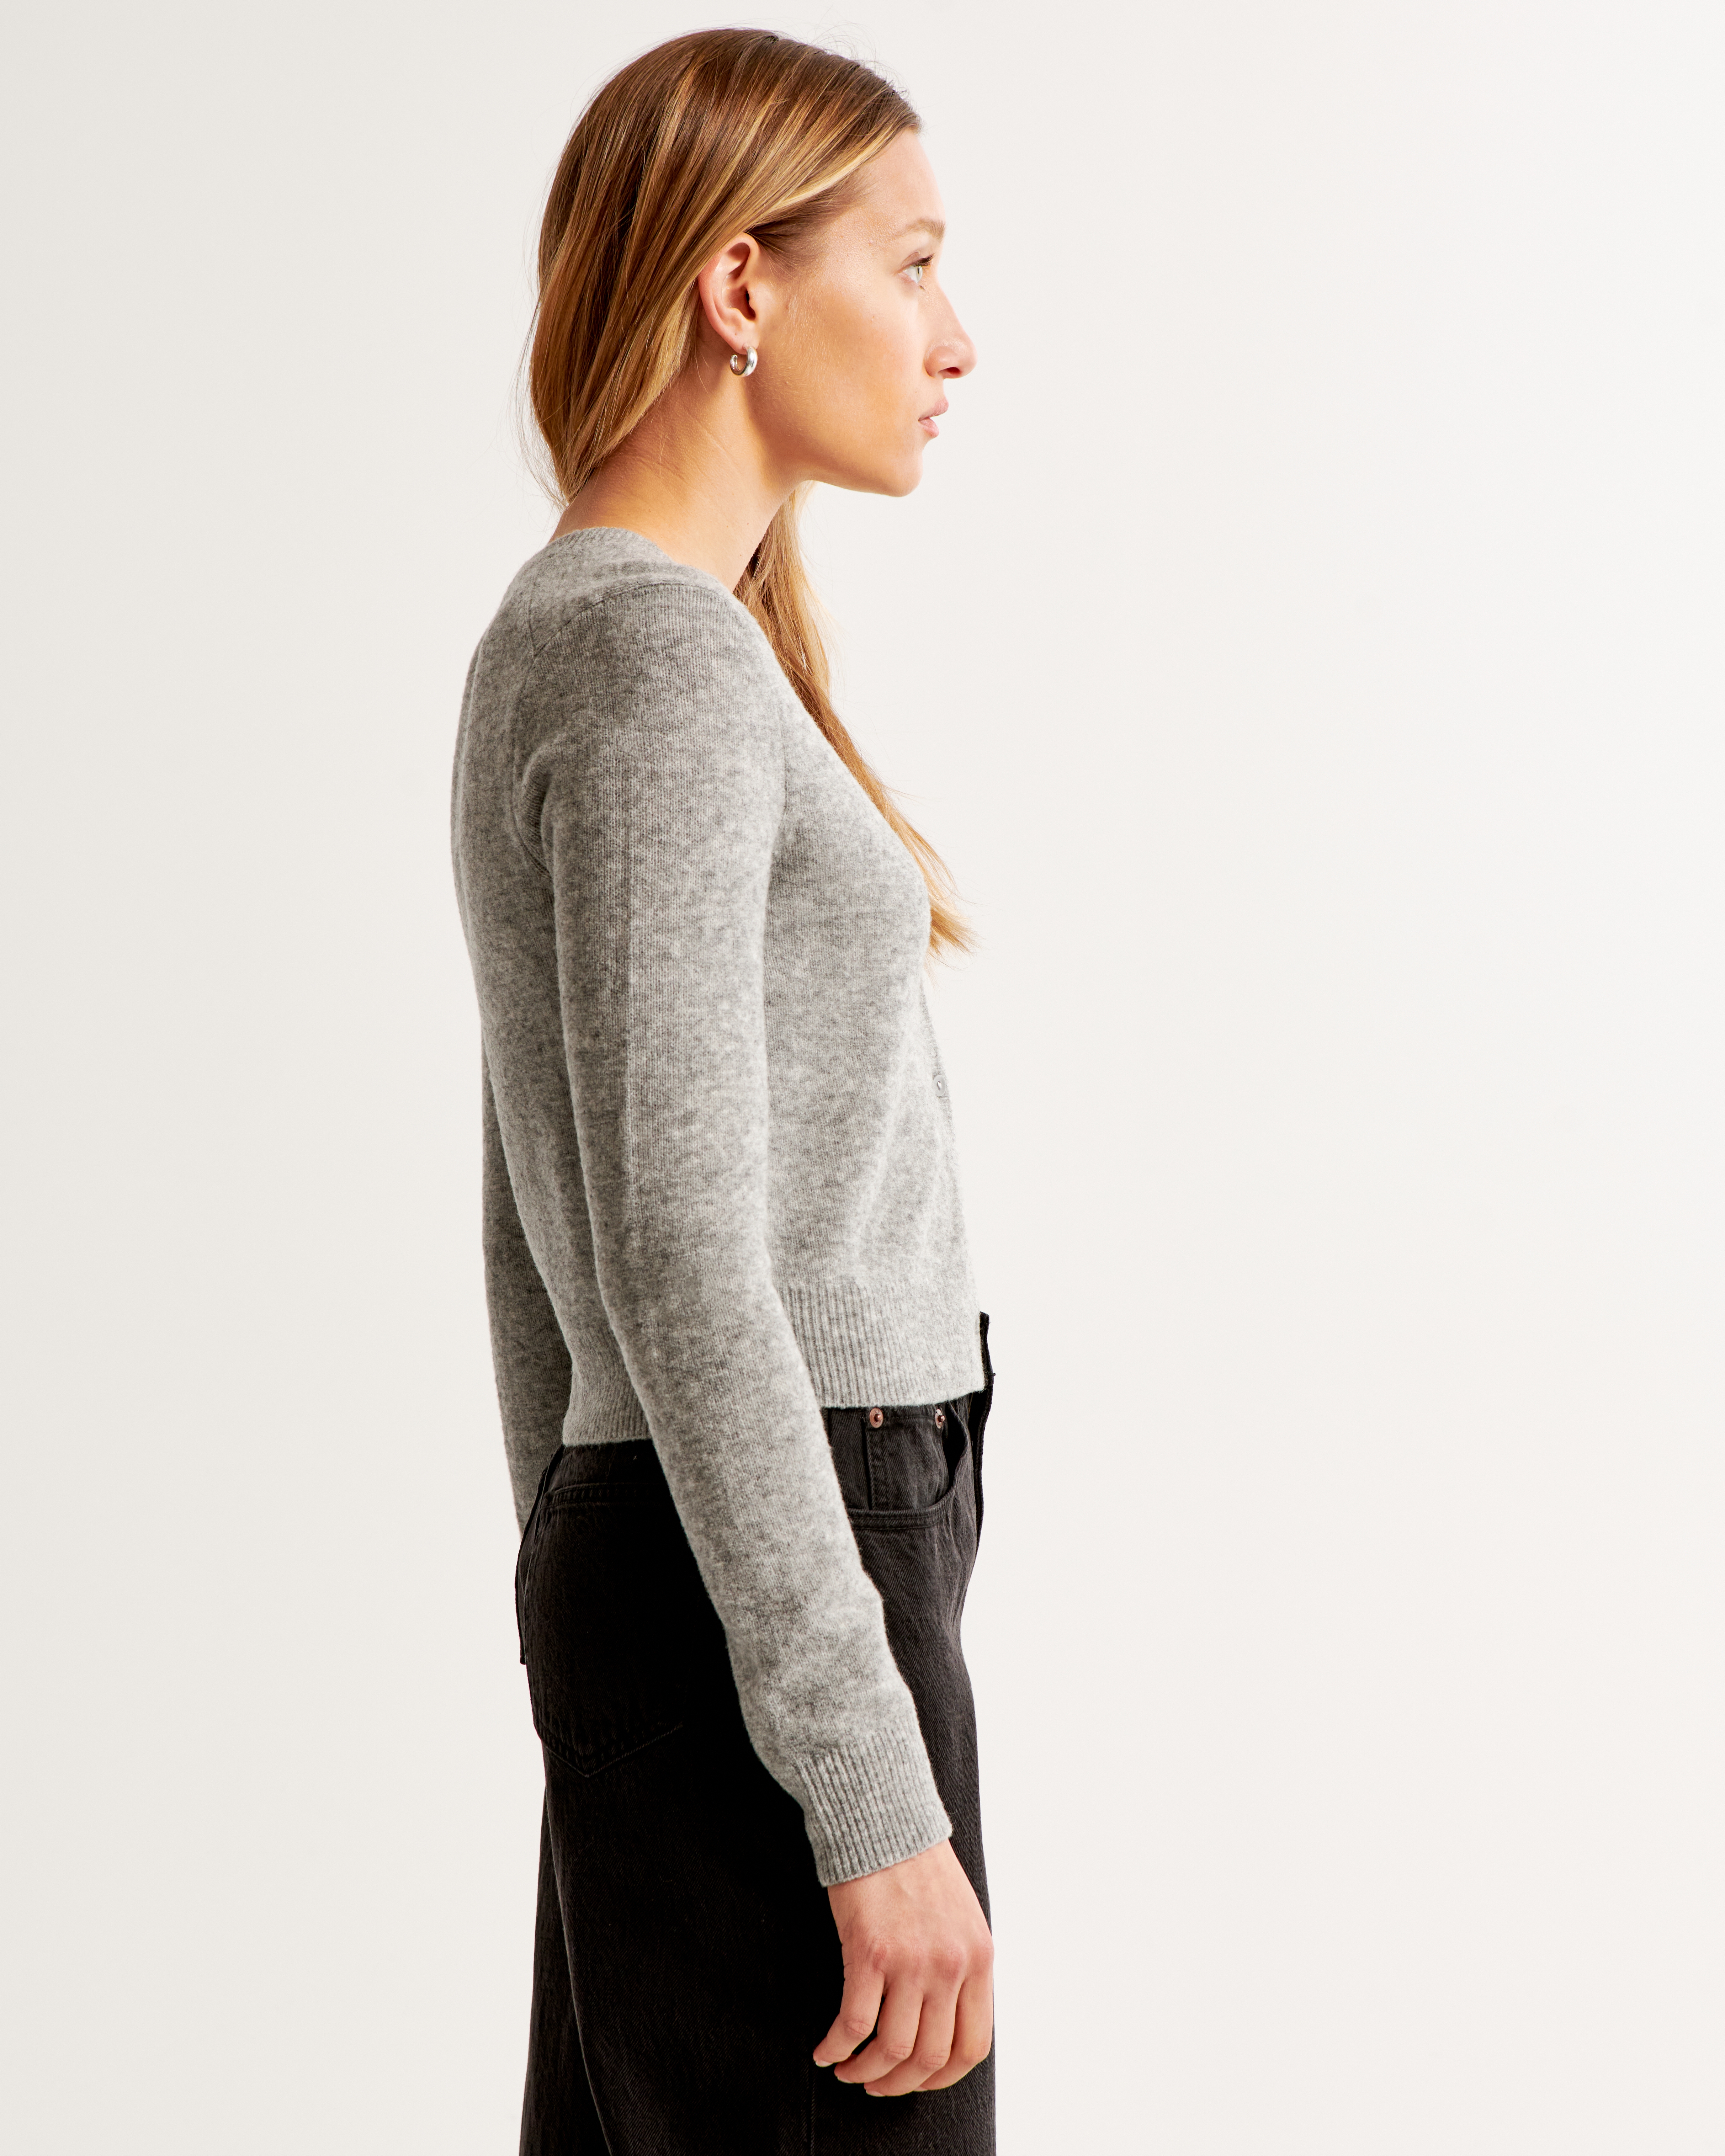 Sydney Wool Blend Crewneck Sweater